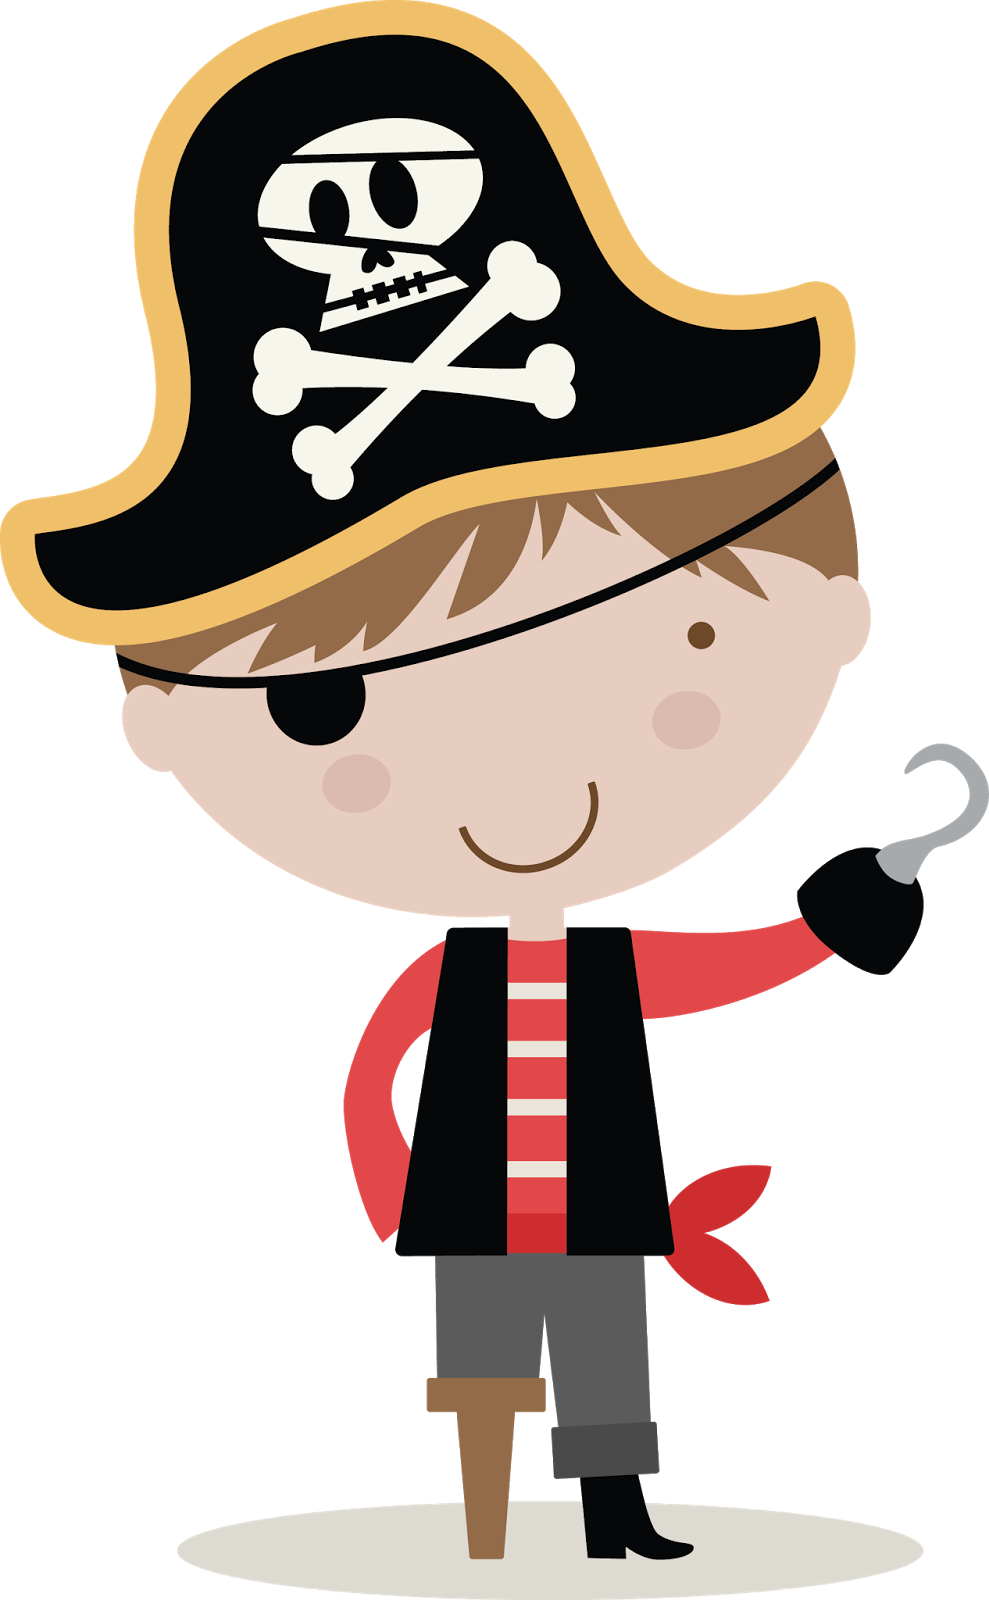 Pirate Download PNG Image